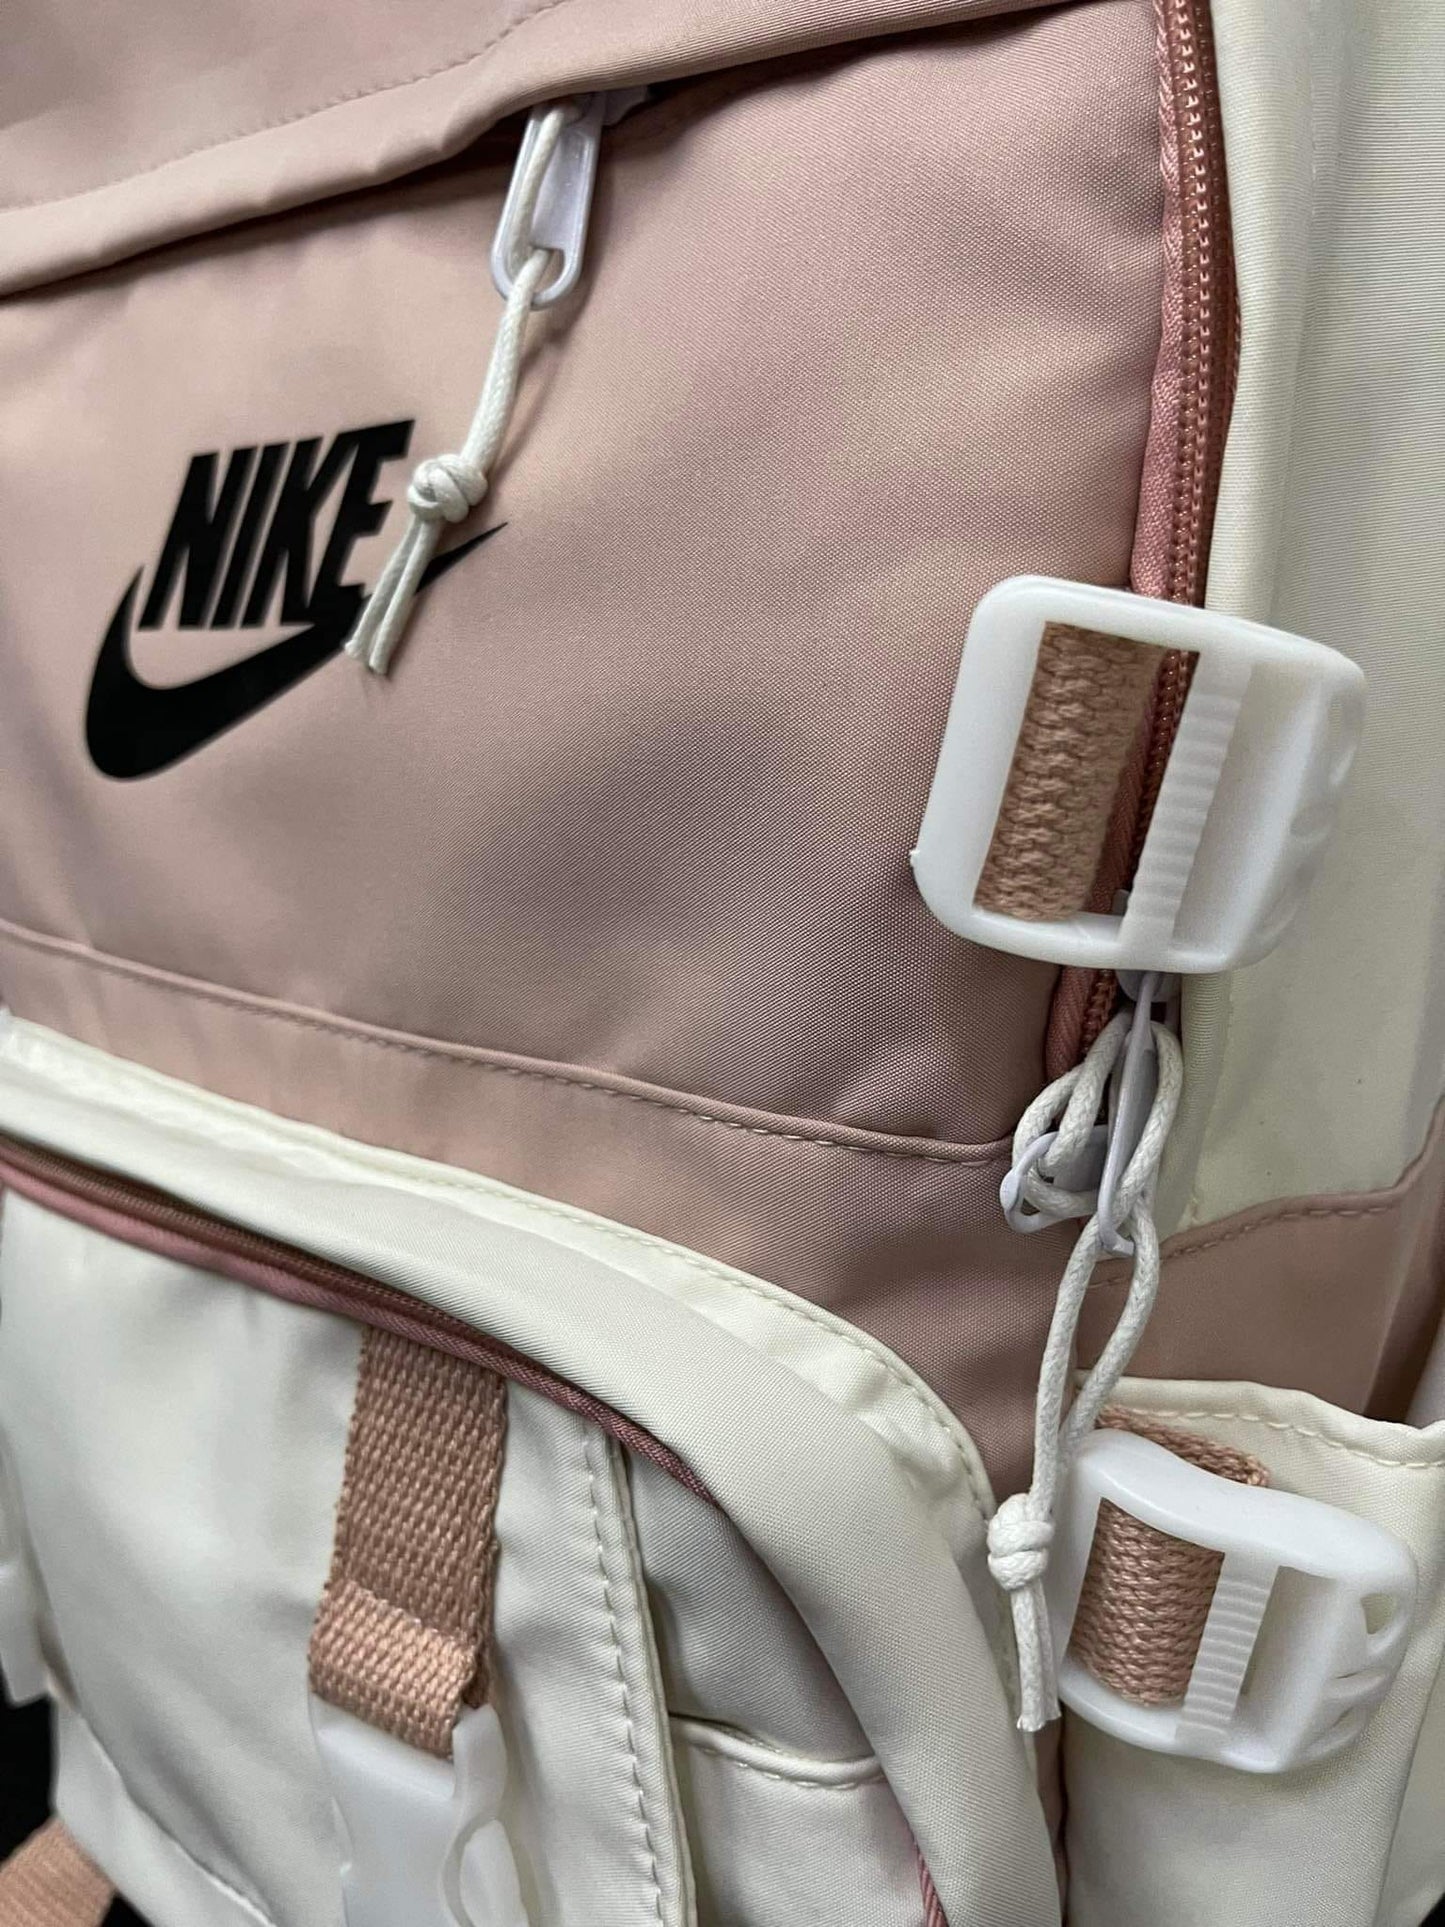 Nike Fashion Style Backpack Korean Design Pink